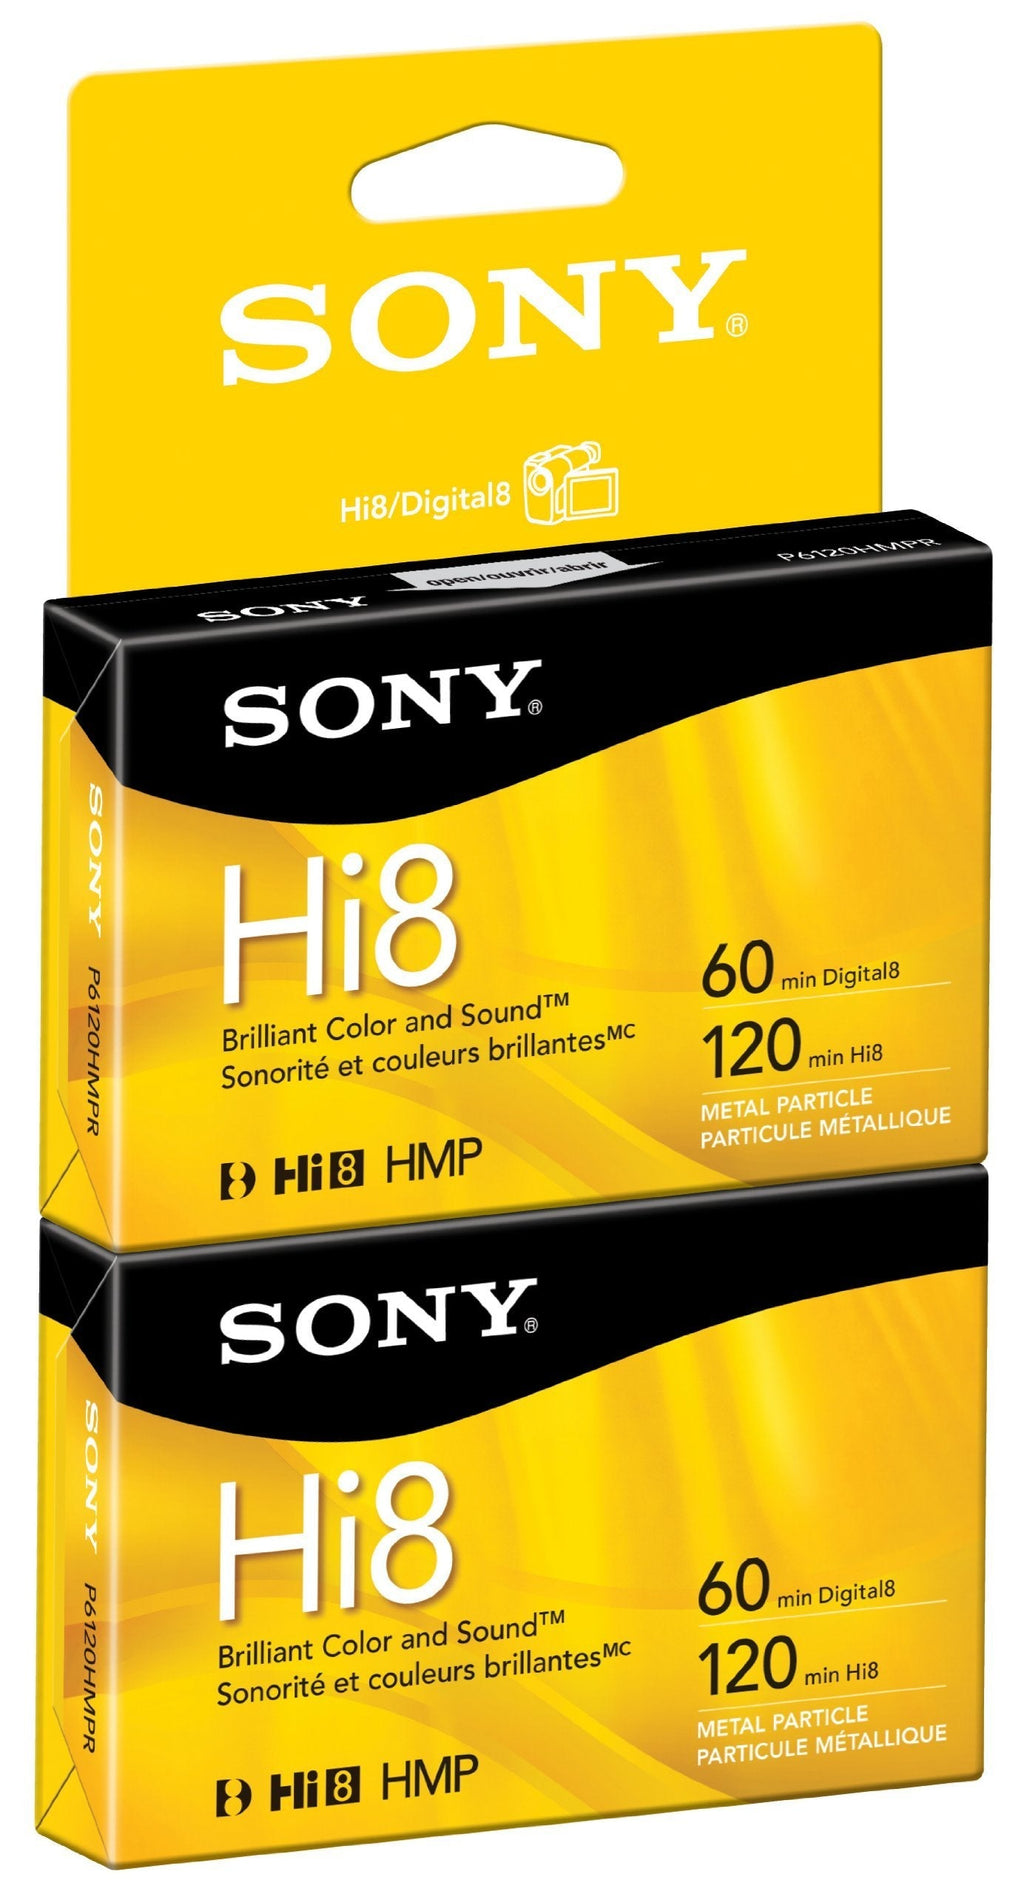  [AUSTRALIA] - Sony P6120HMPR/2C 2-Pack 120-Minute Hi8 Tape with Hangtab